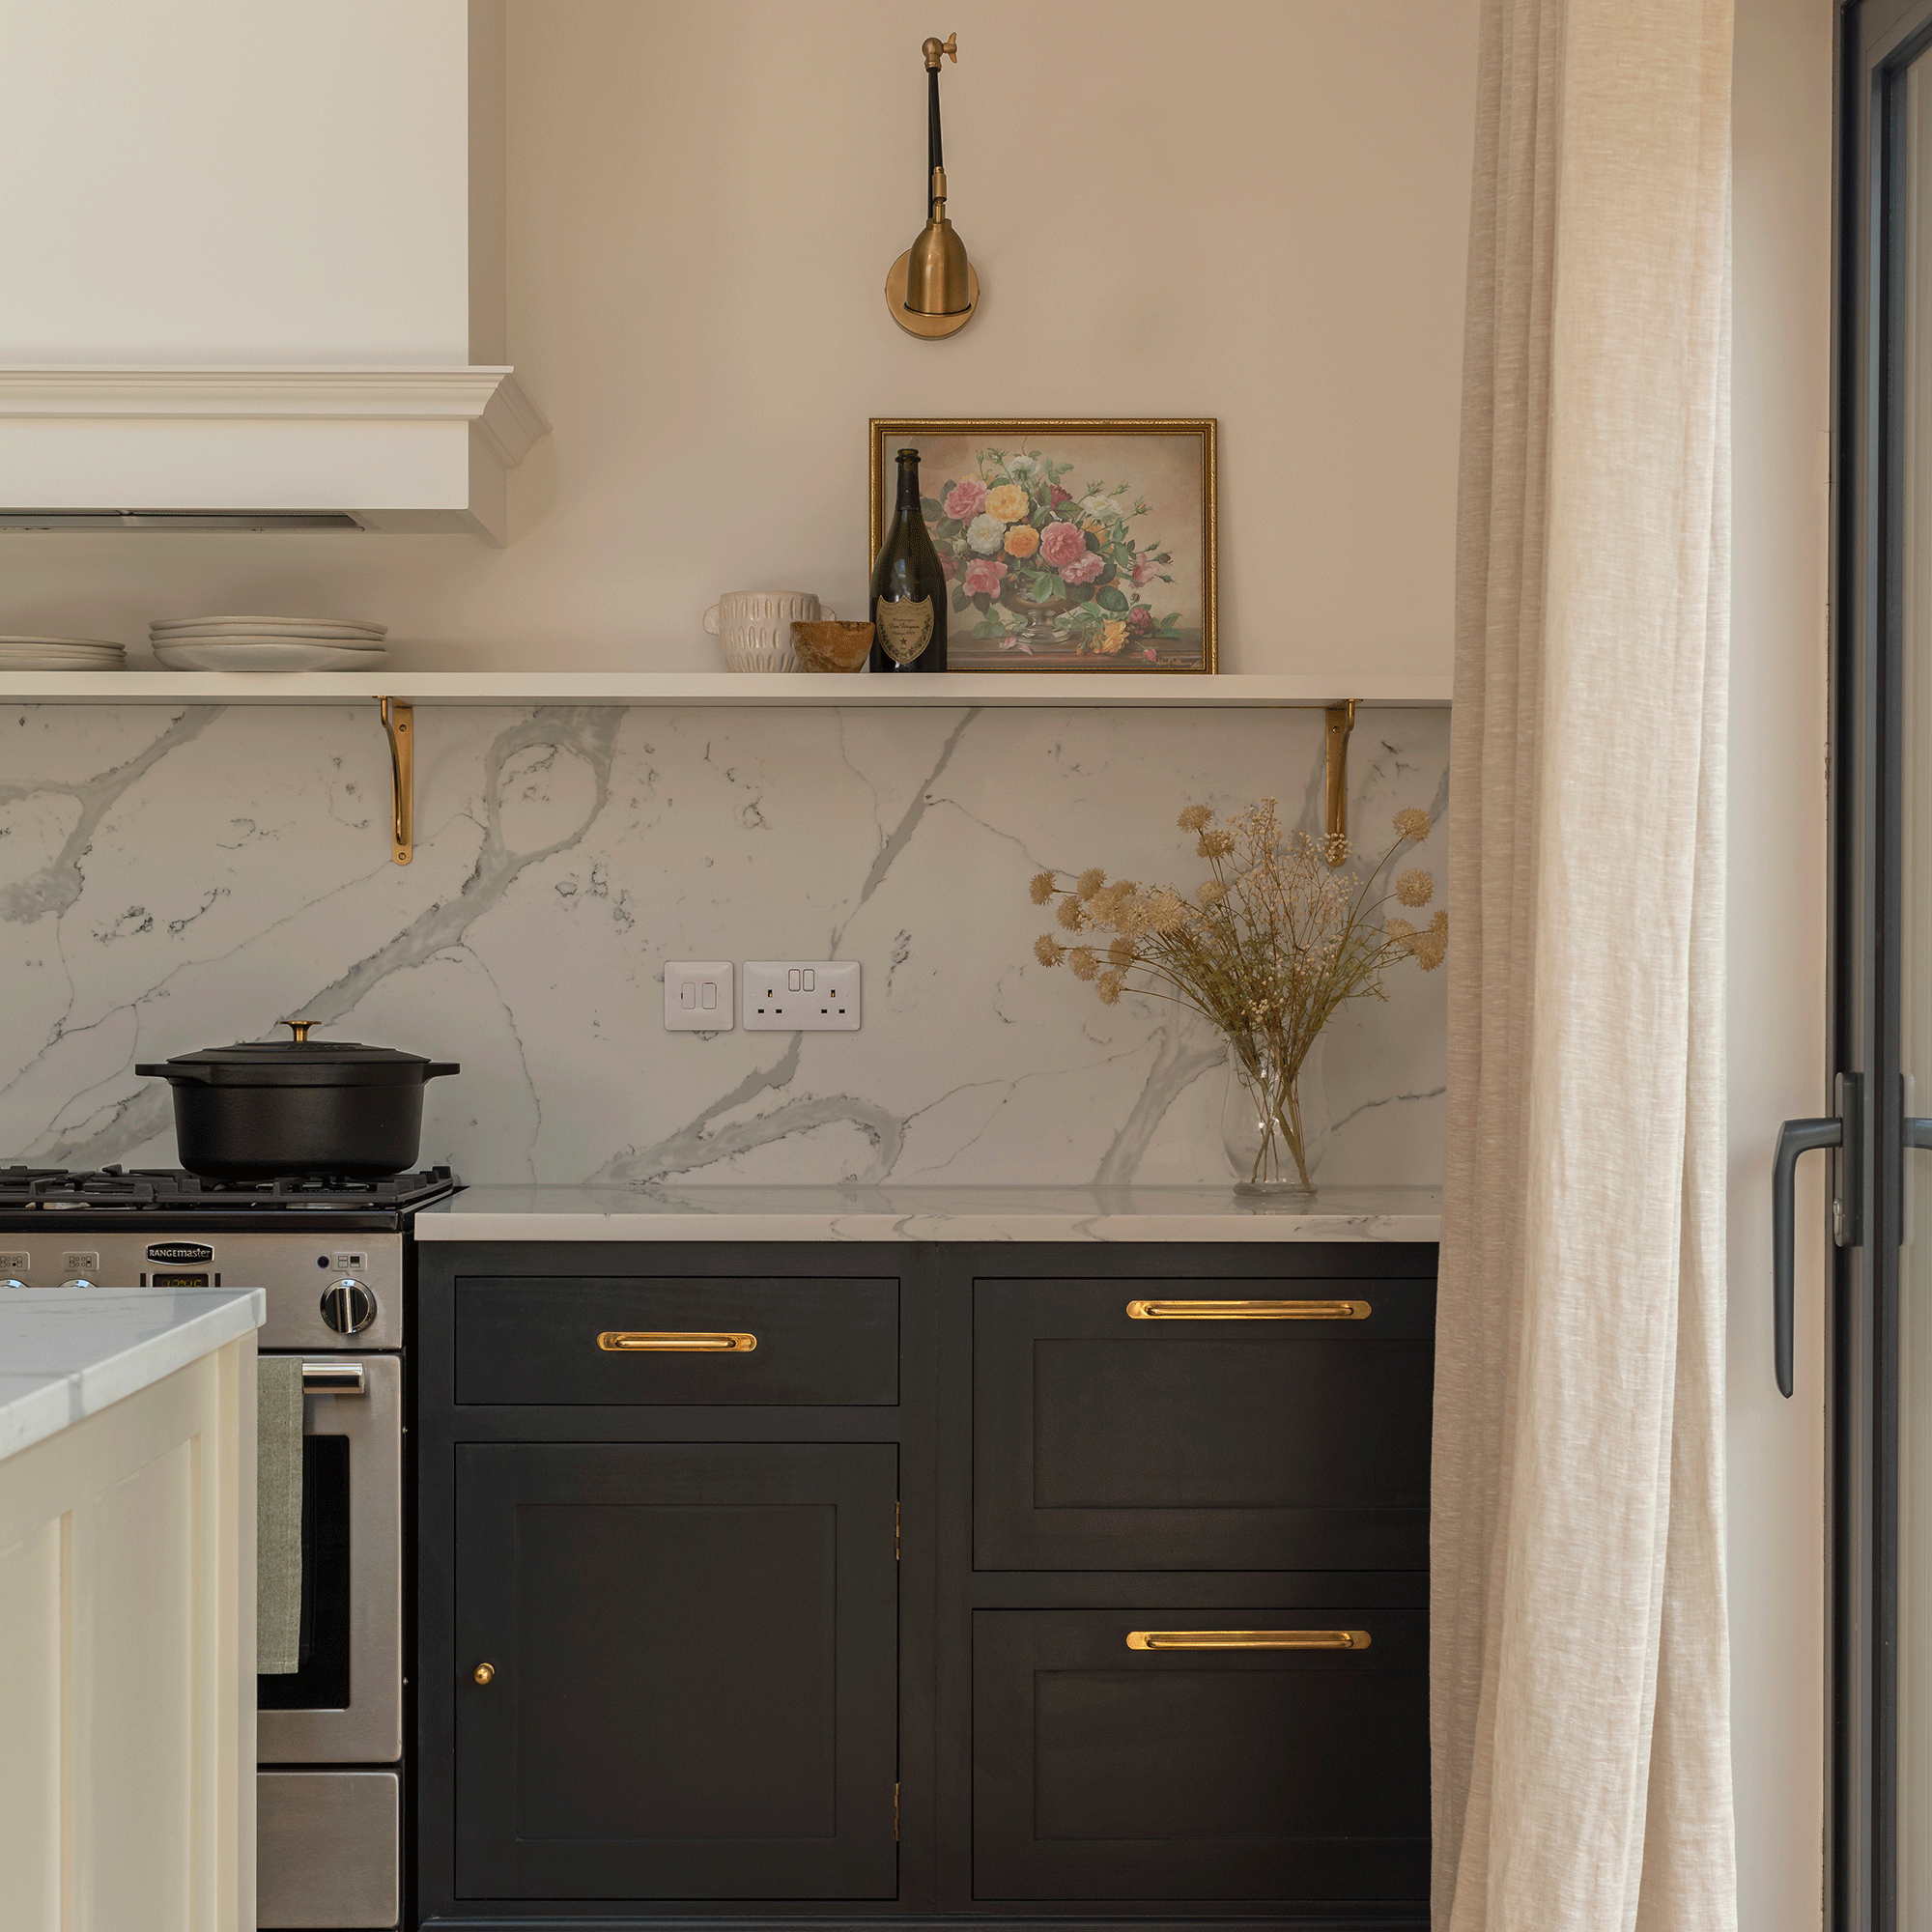 Dark kitchen cabinets with gold handles and beige walls